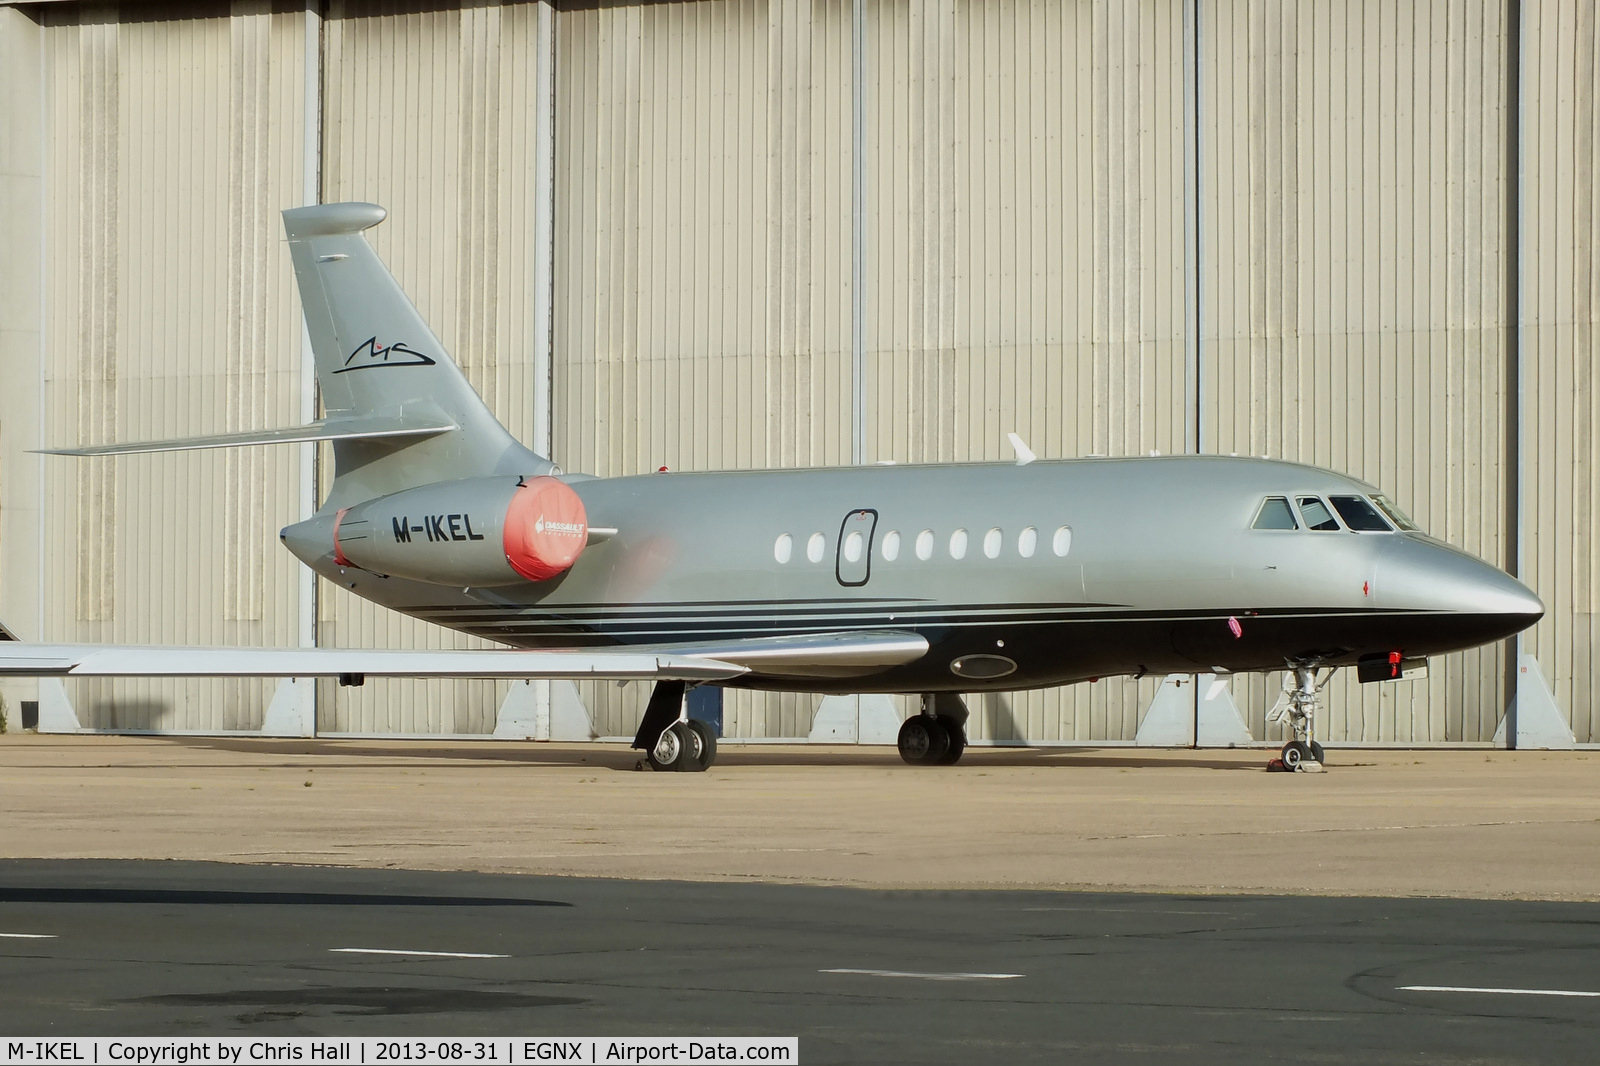 M-IKEL, 2010 Dassault Falcon 2000LX C/N 216, Michael Schumacher's private jet 